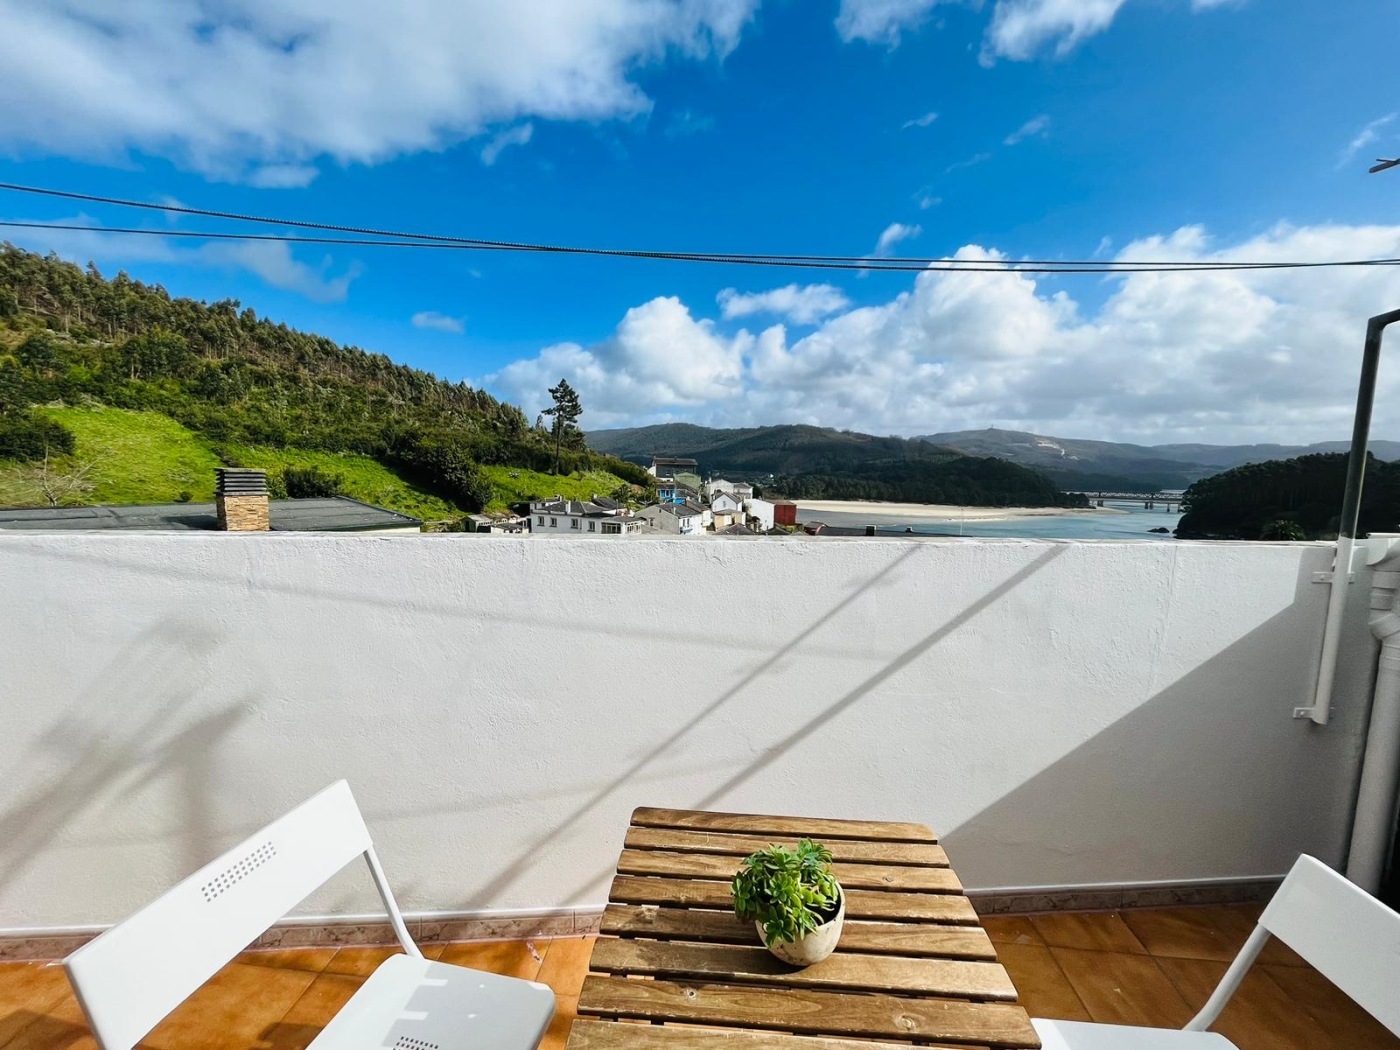 Encantadora vivienda con terraza con vistas al mar en la Ría do Barqueiro en Mañón